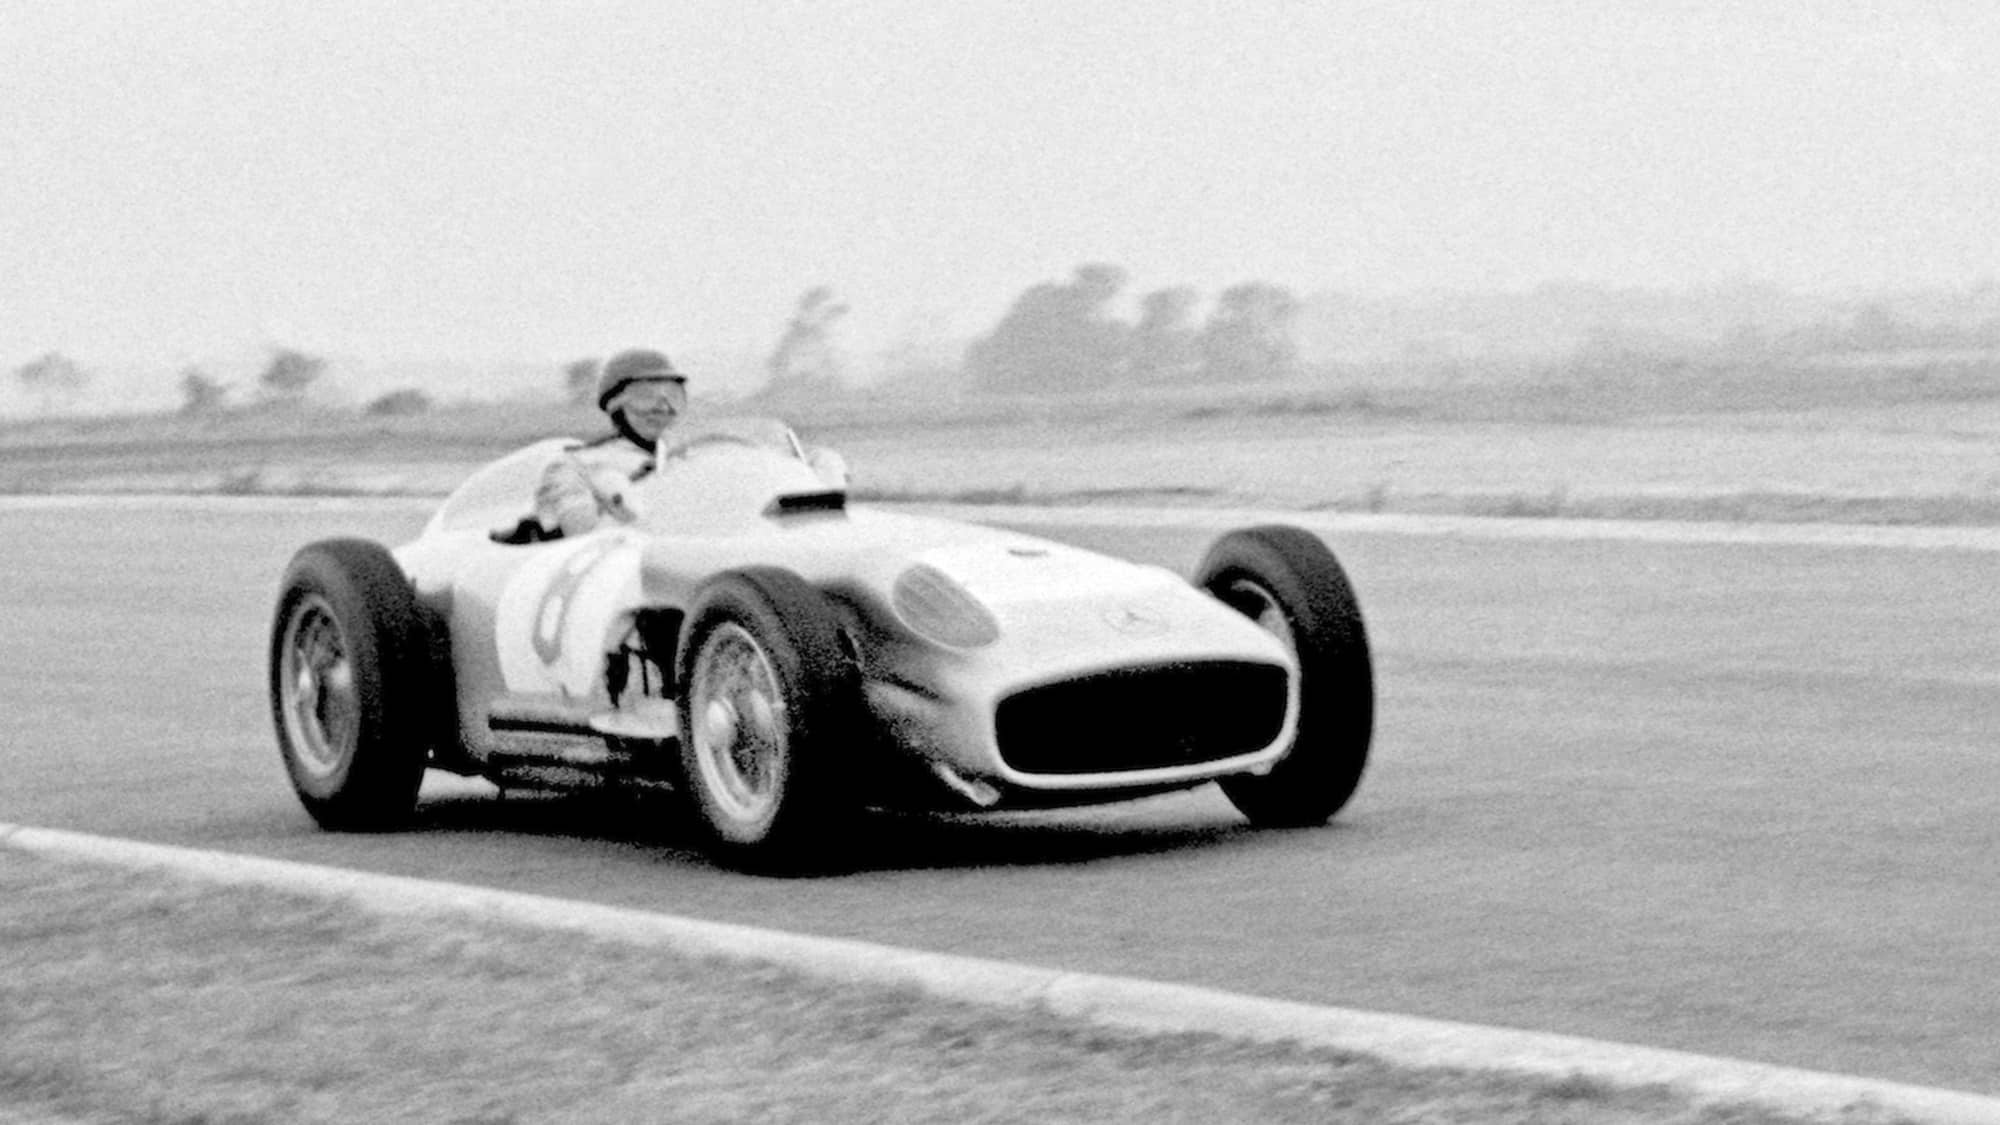 Hans Hermann in Mercedes W196